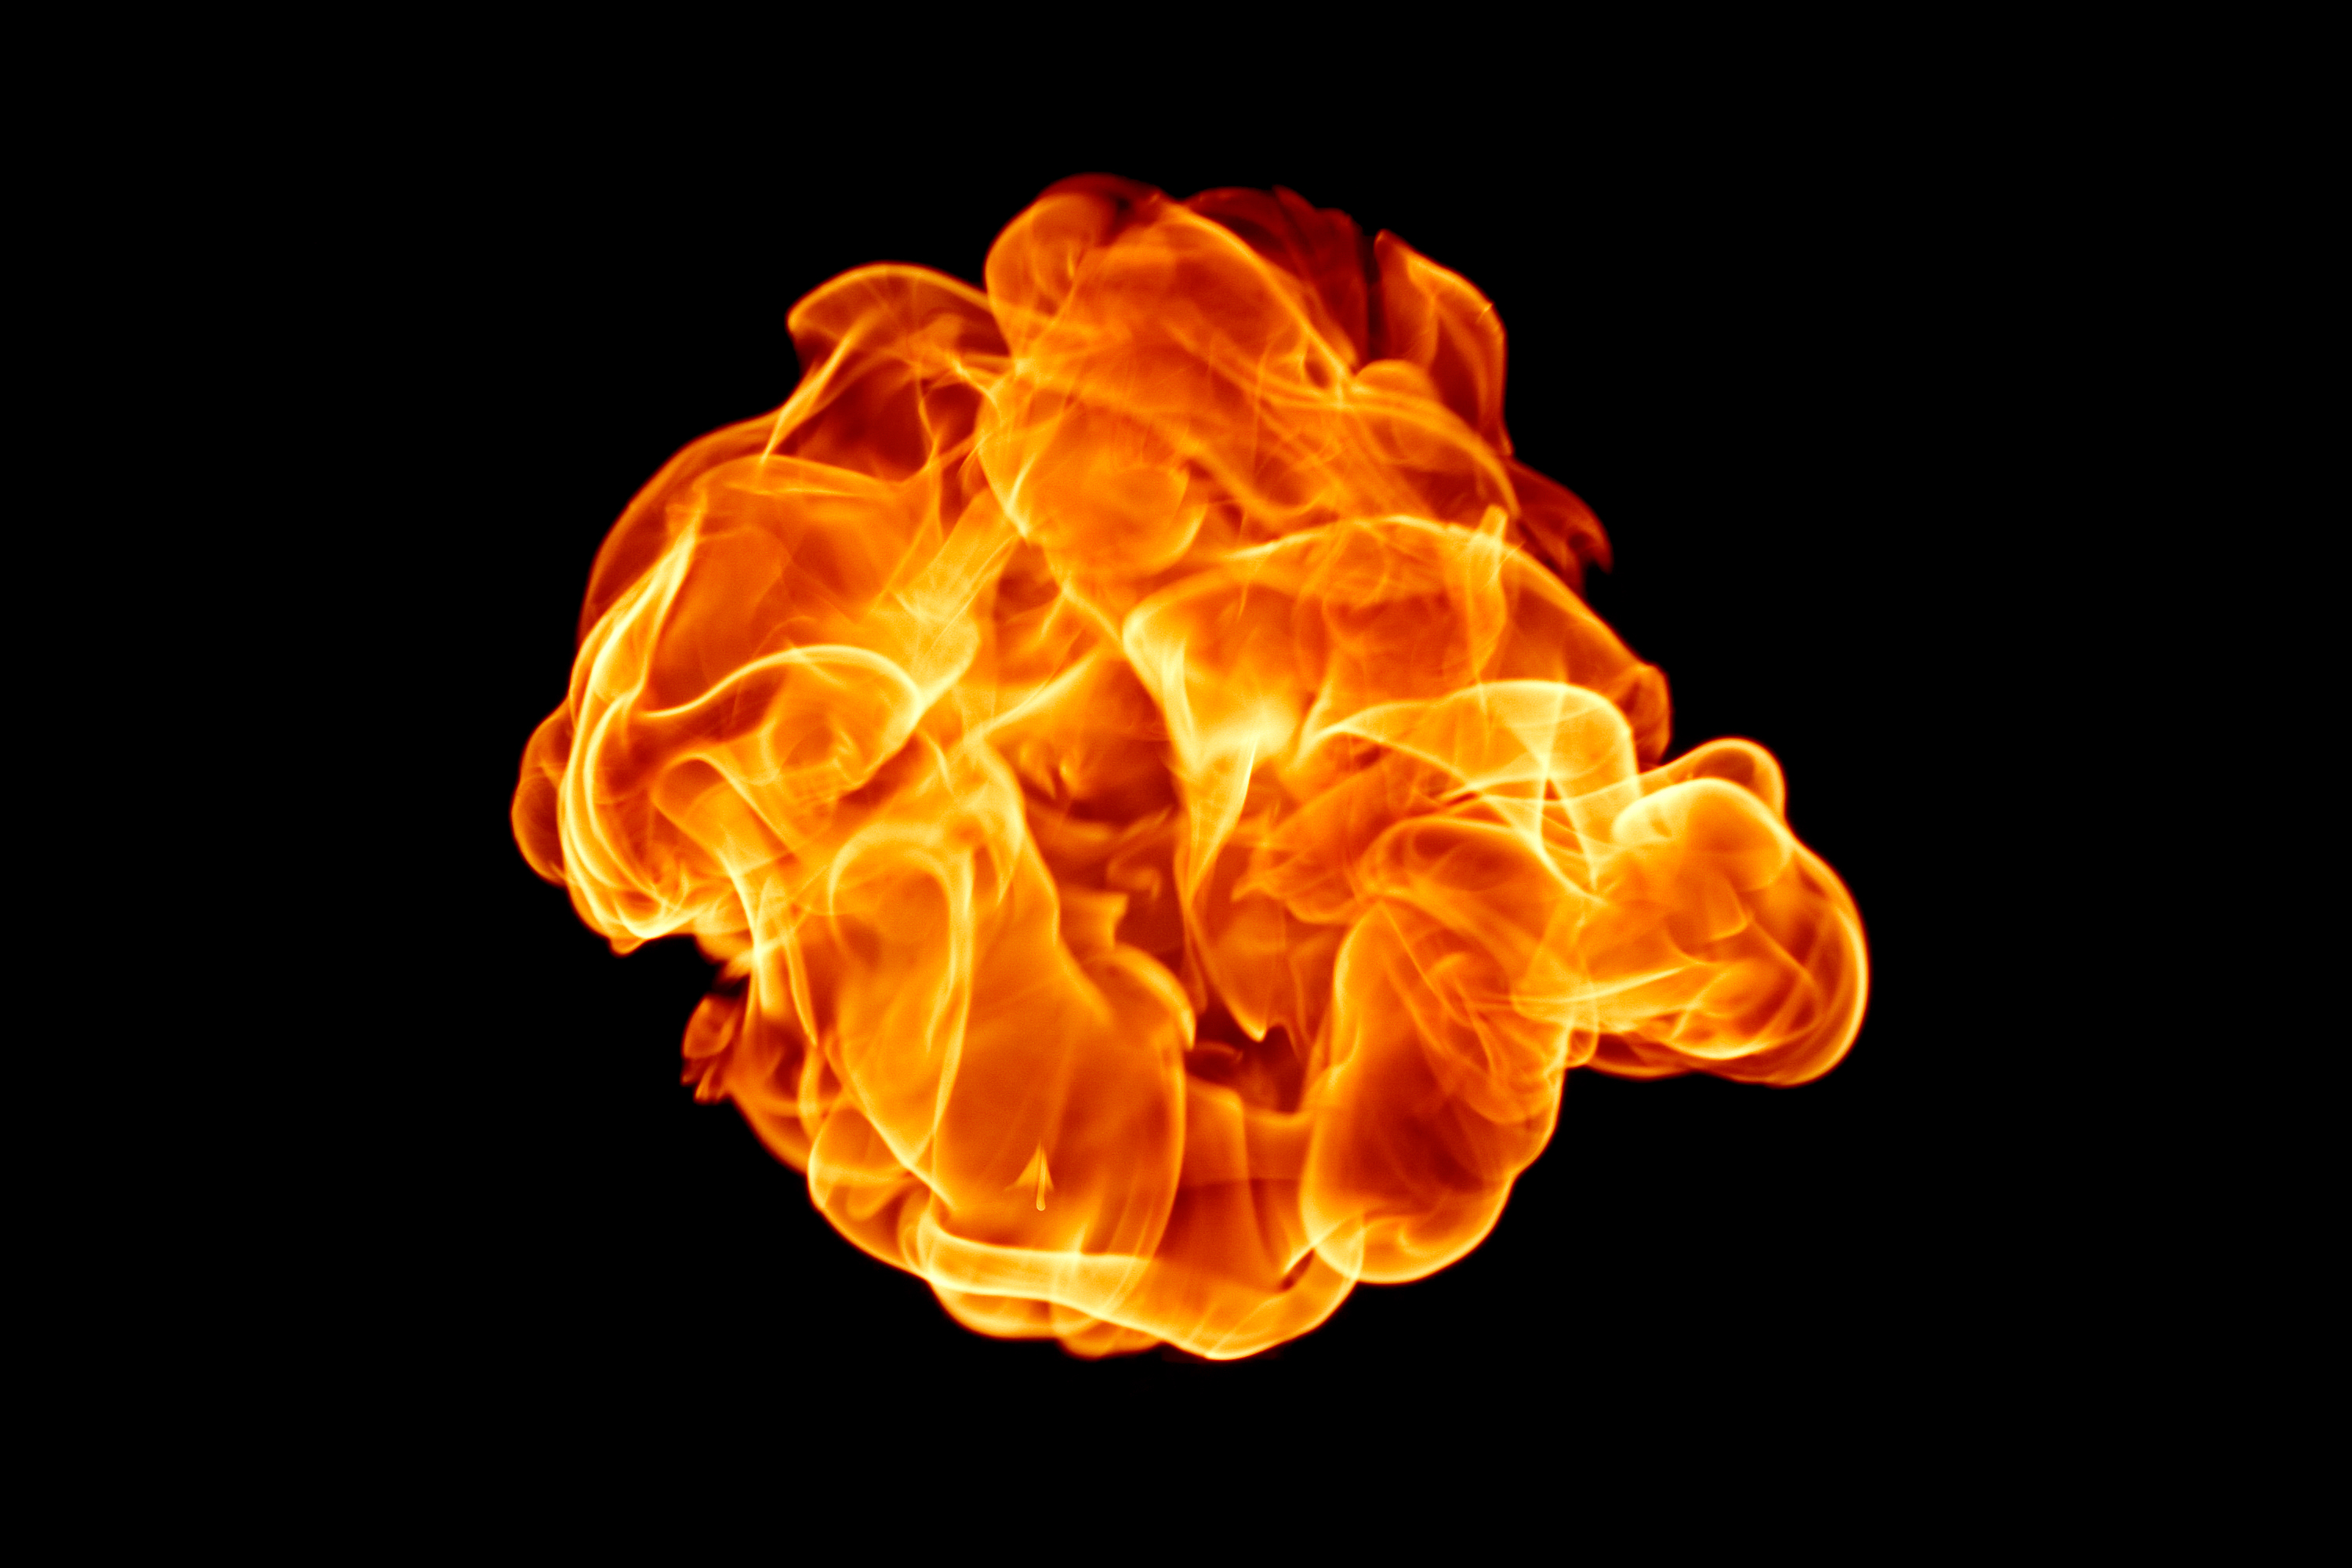 3d Burning Basketball Ball Fireball Wallpaper Stock Illustration 1559206313   Shutterstock